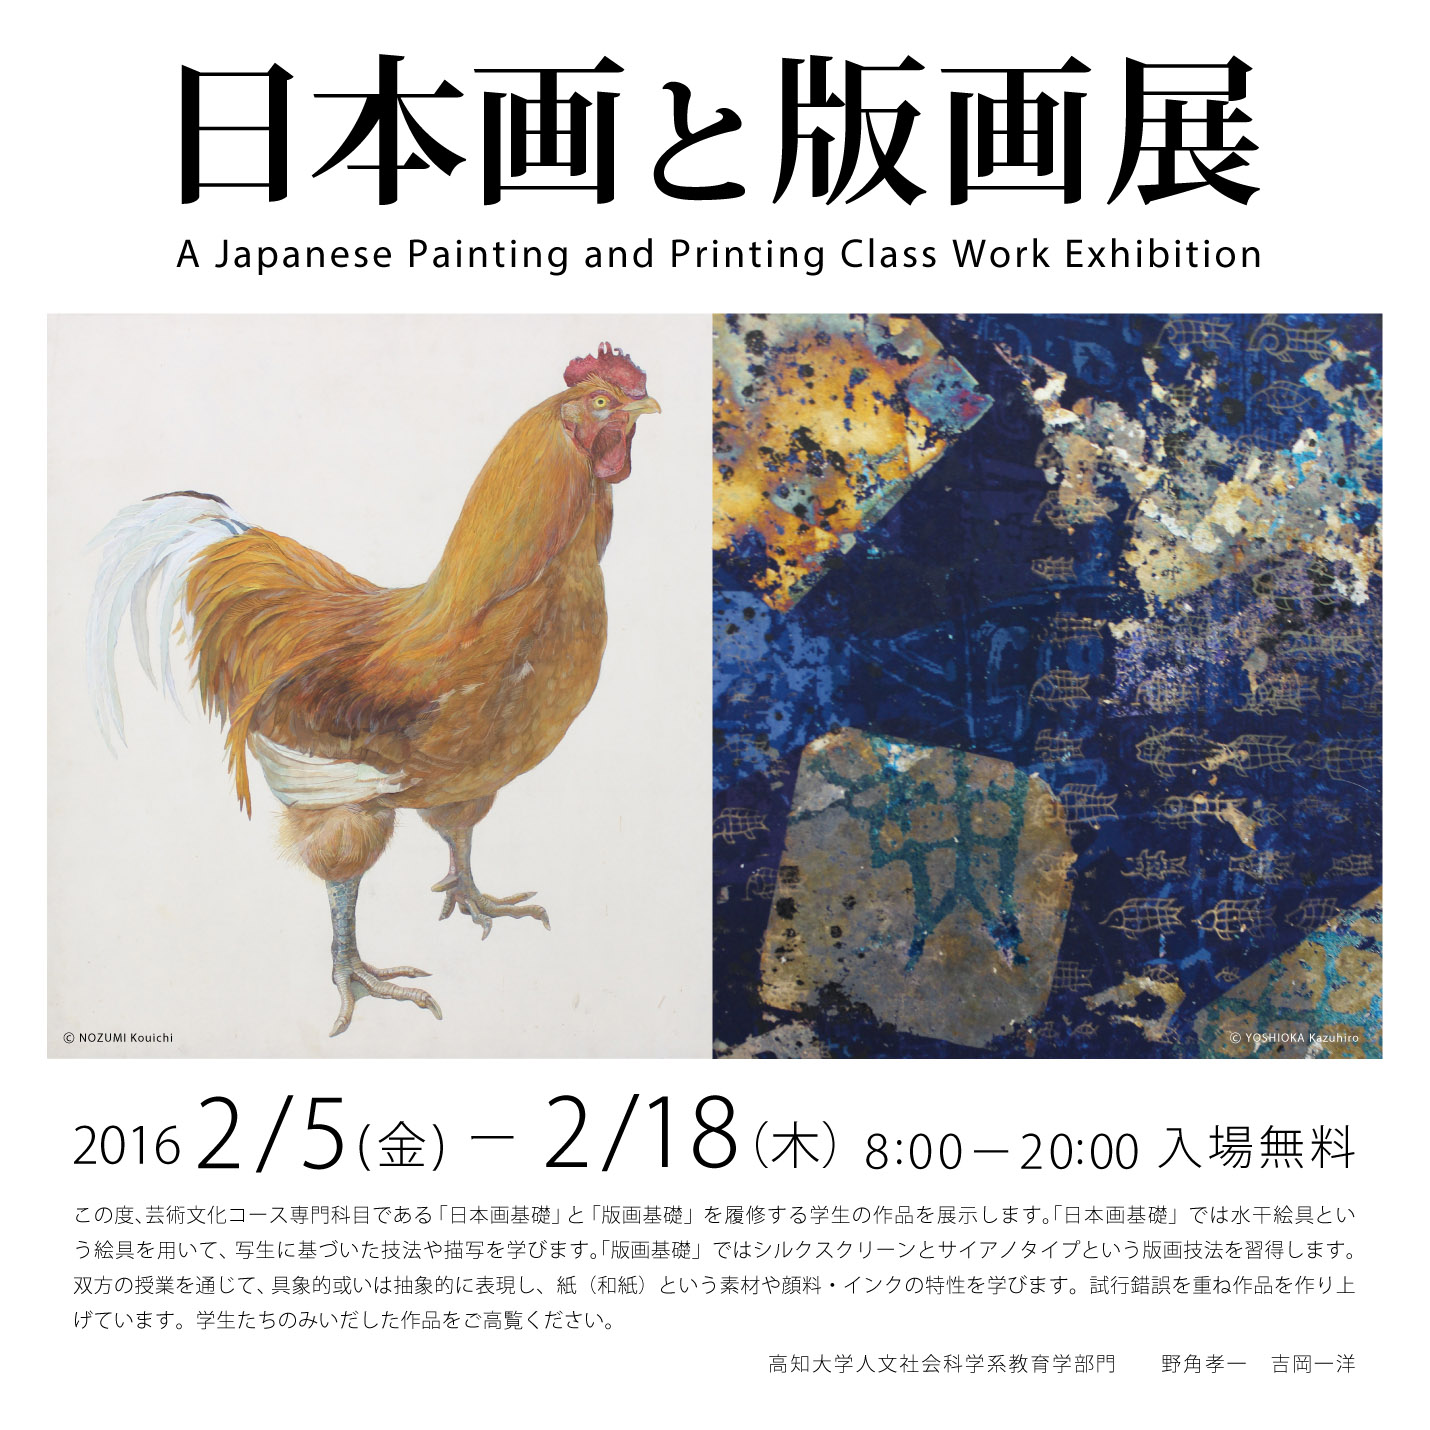 日本画と版画展